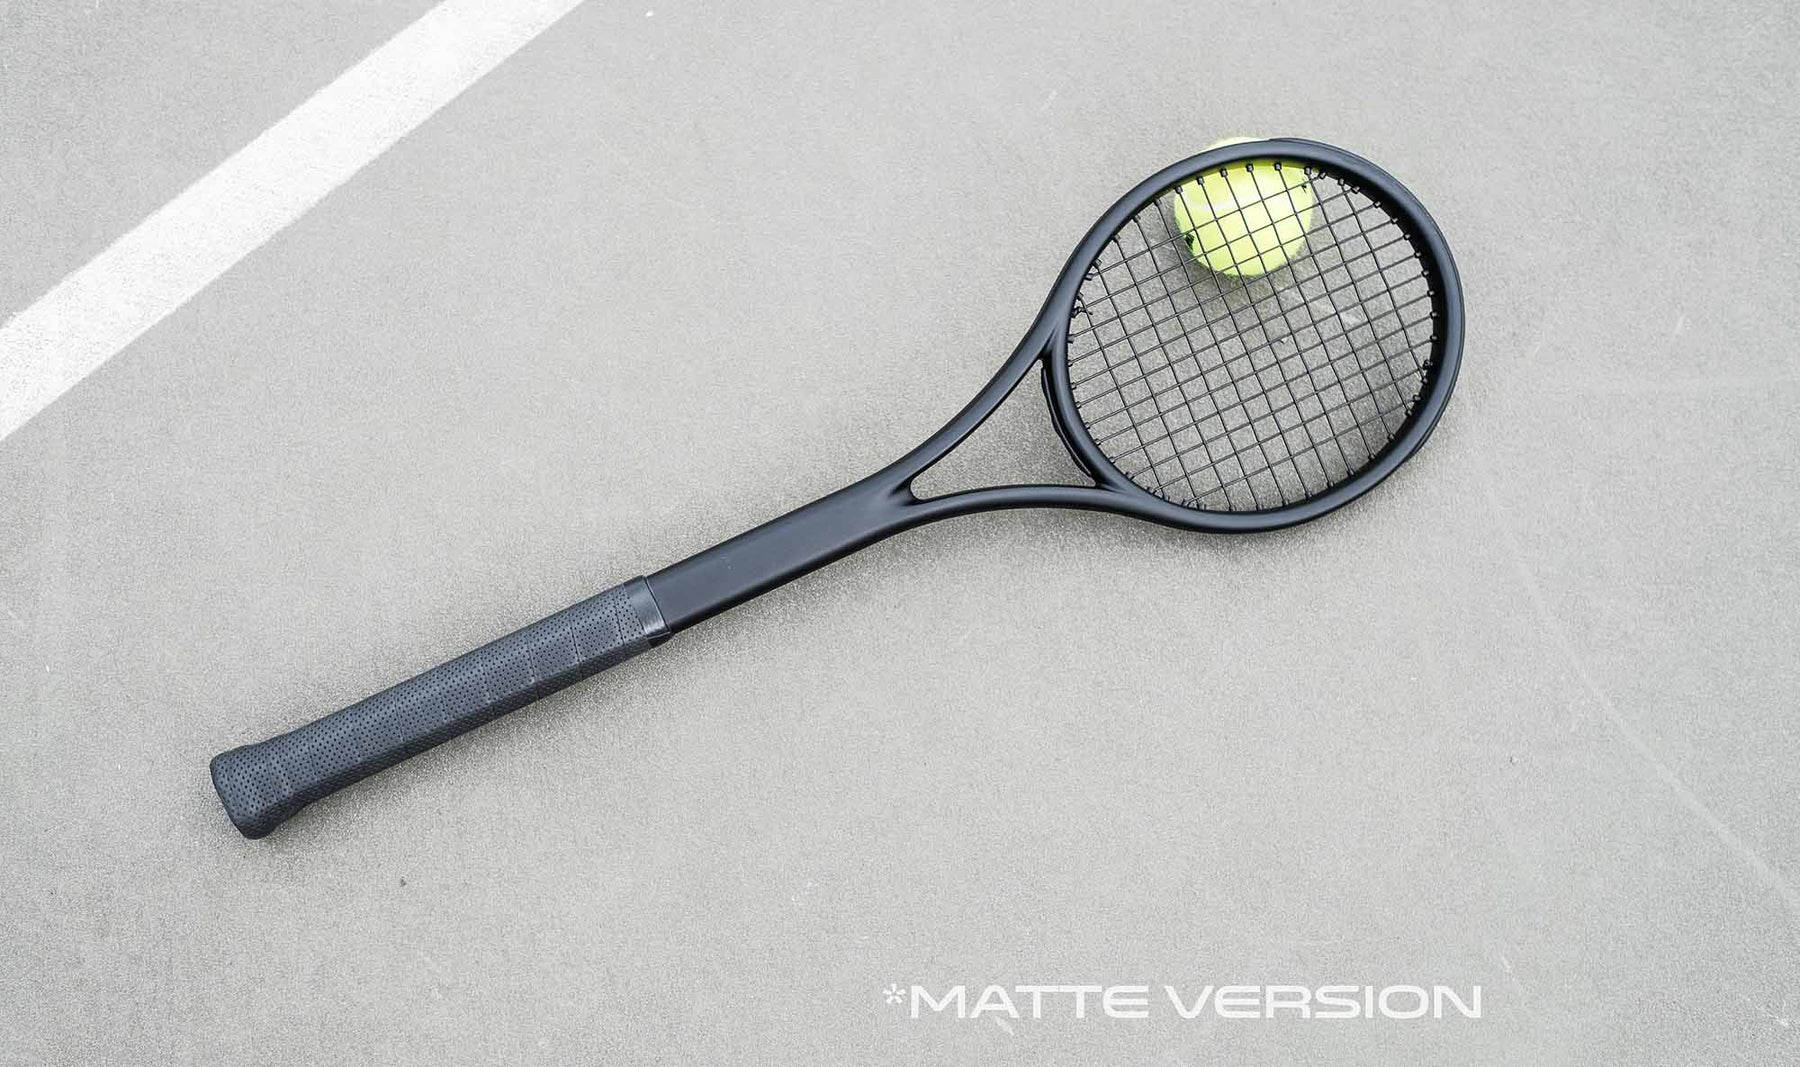 Functional Tennis Saber Prototype edition matte version